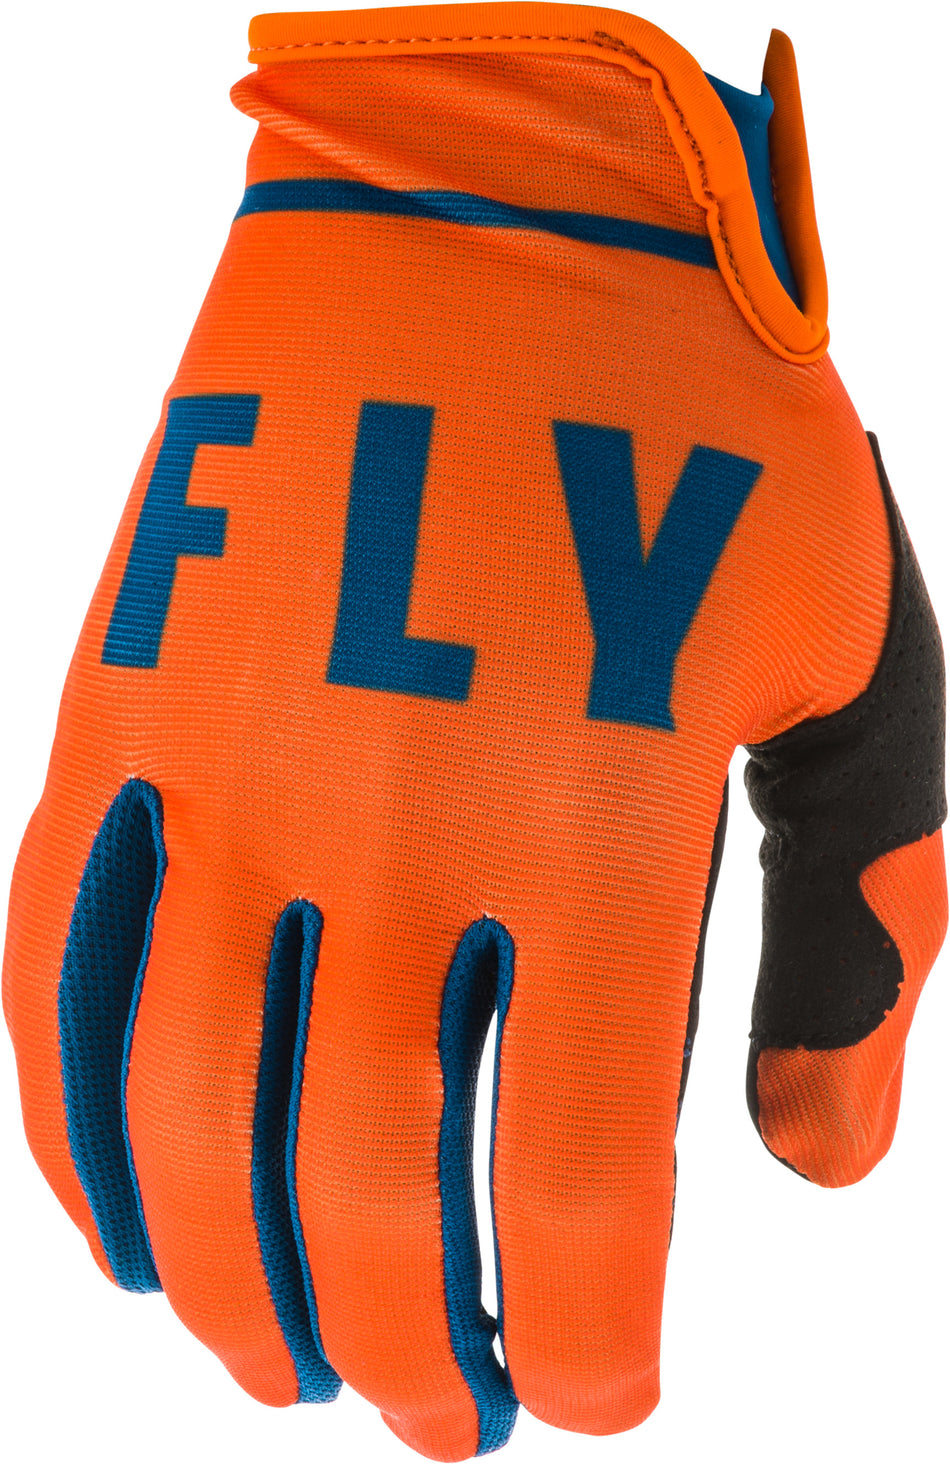 FLY RACING Lite Gloves Orange/Navy Sz 05 373-71305